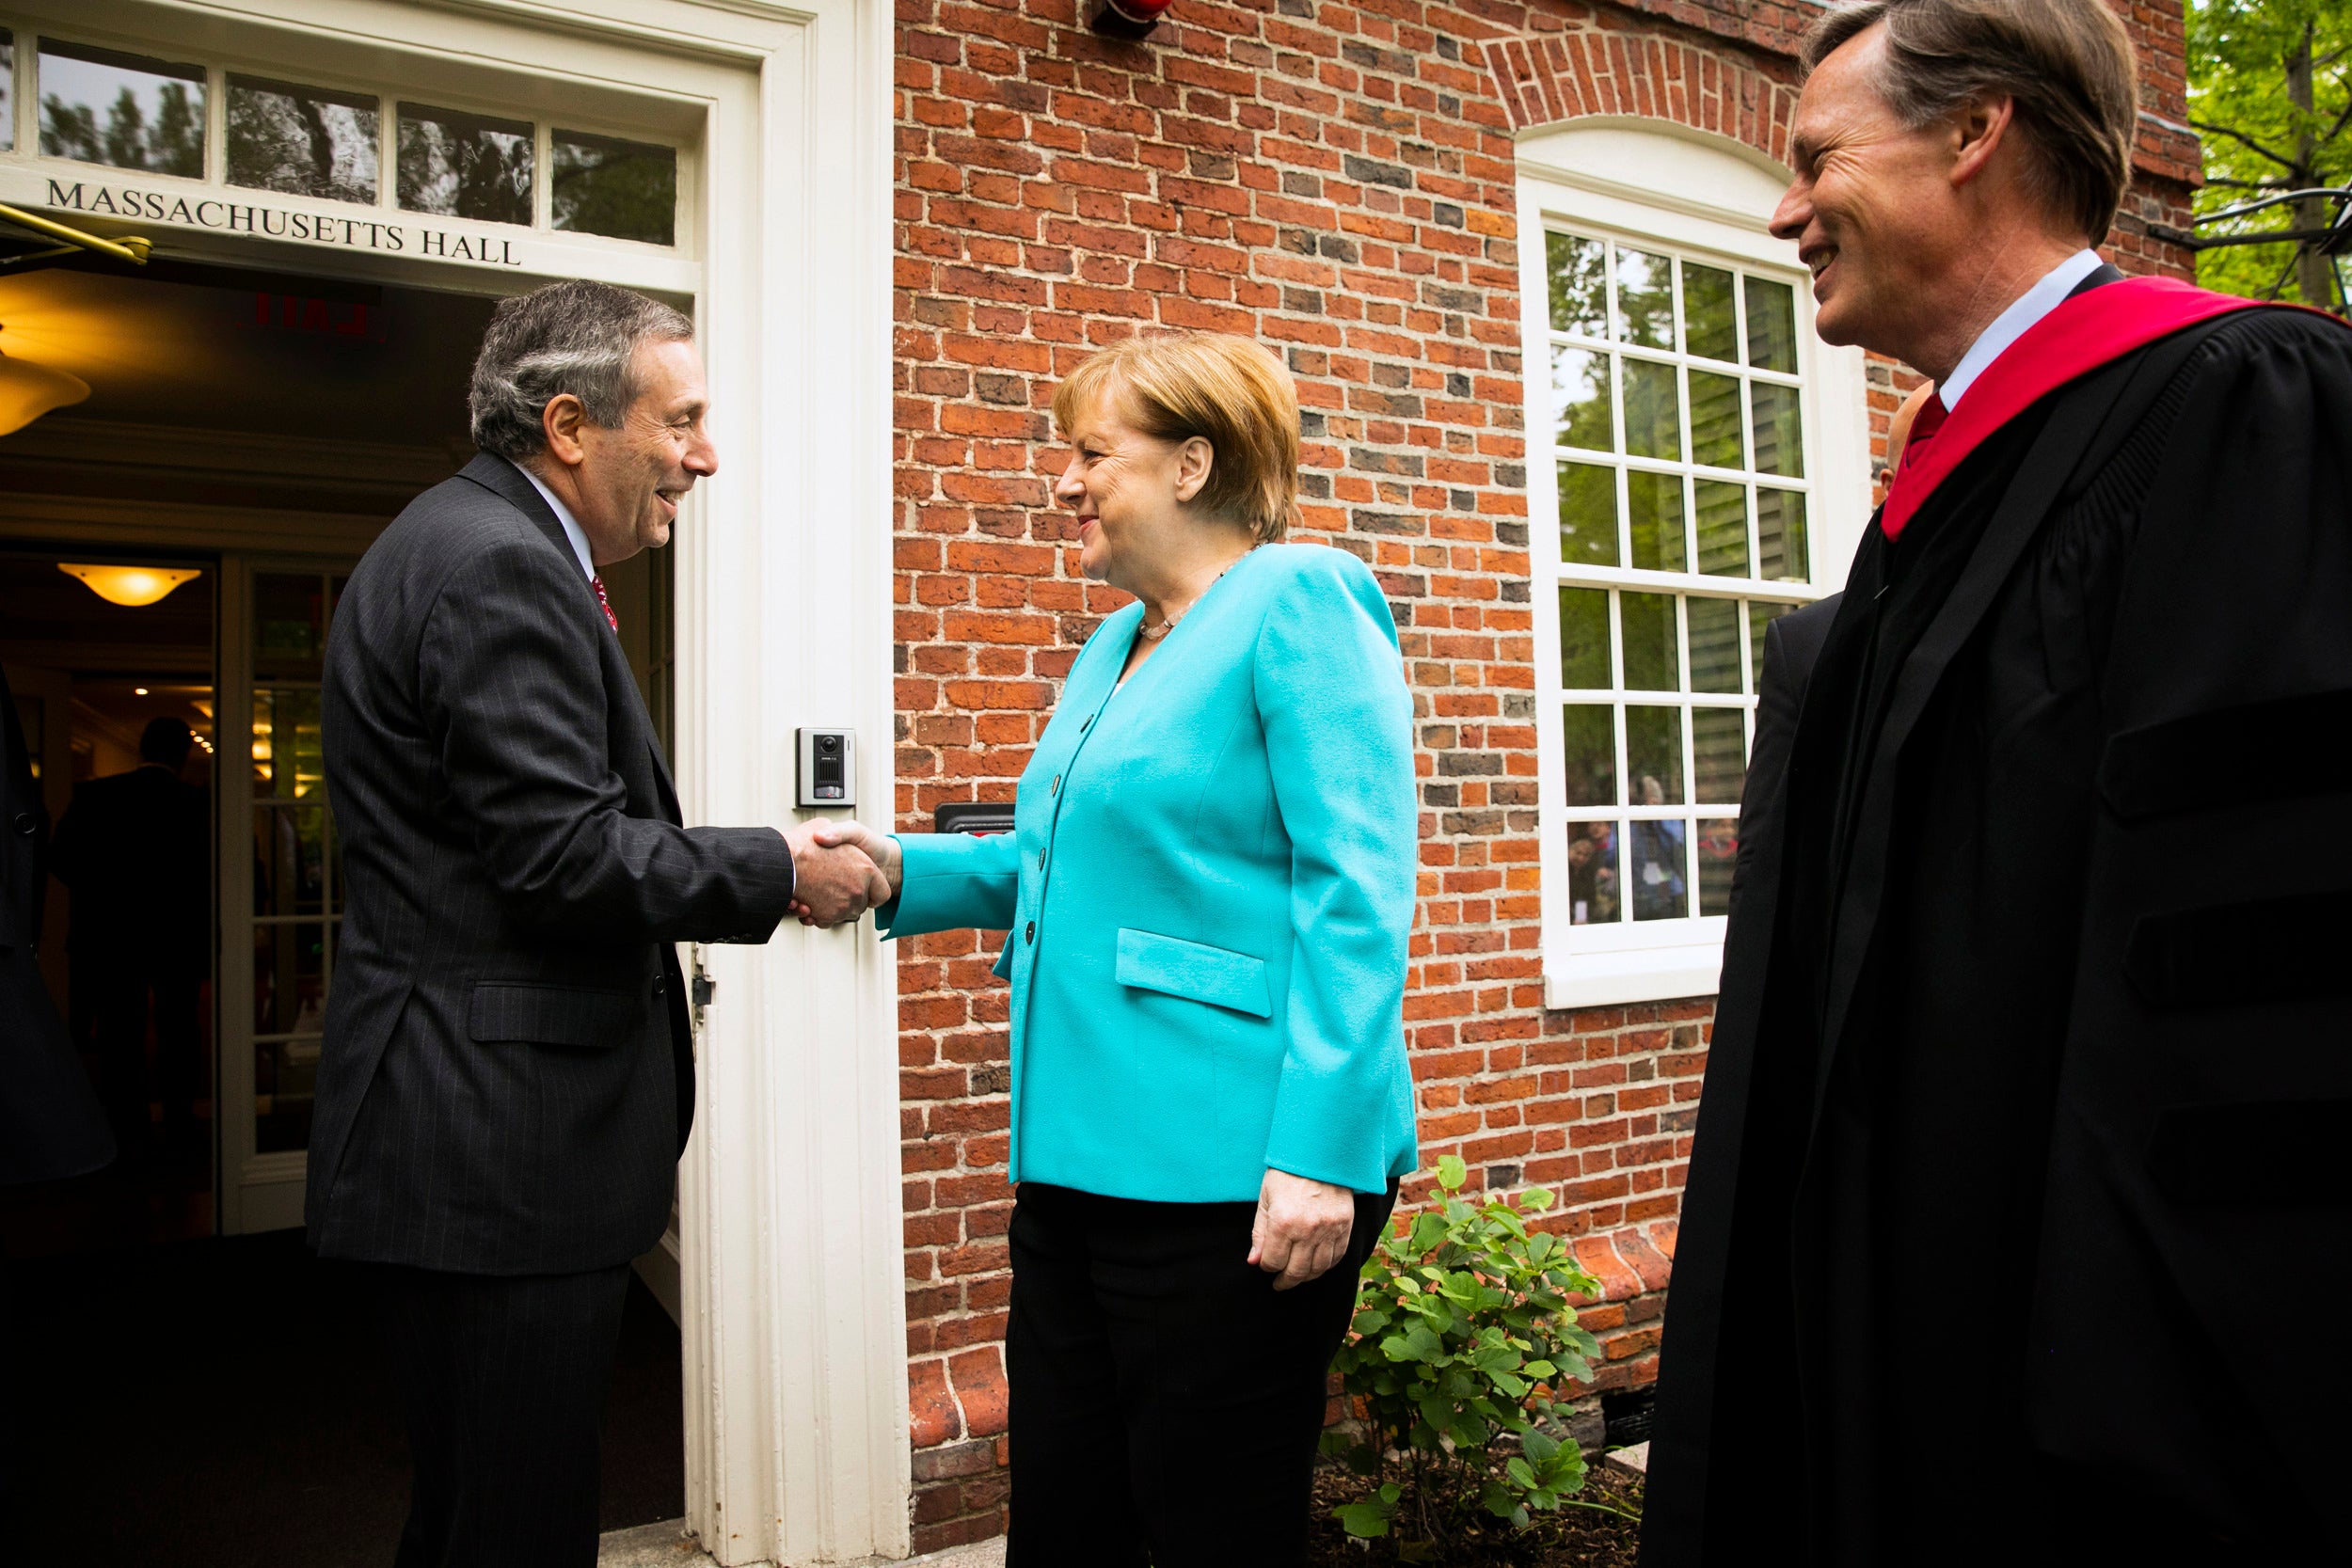 Bacow welcomed German Chancellor Angela Merkel, the 2019 Commencement speaker, to Massachusetts Hall.